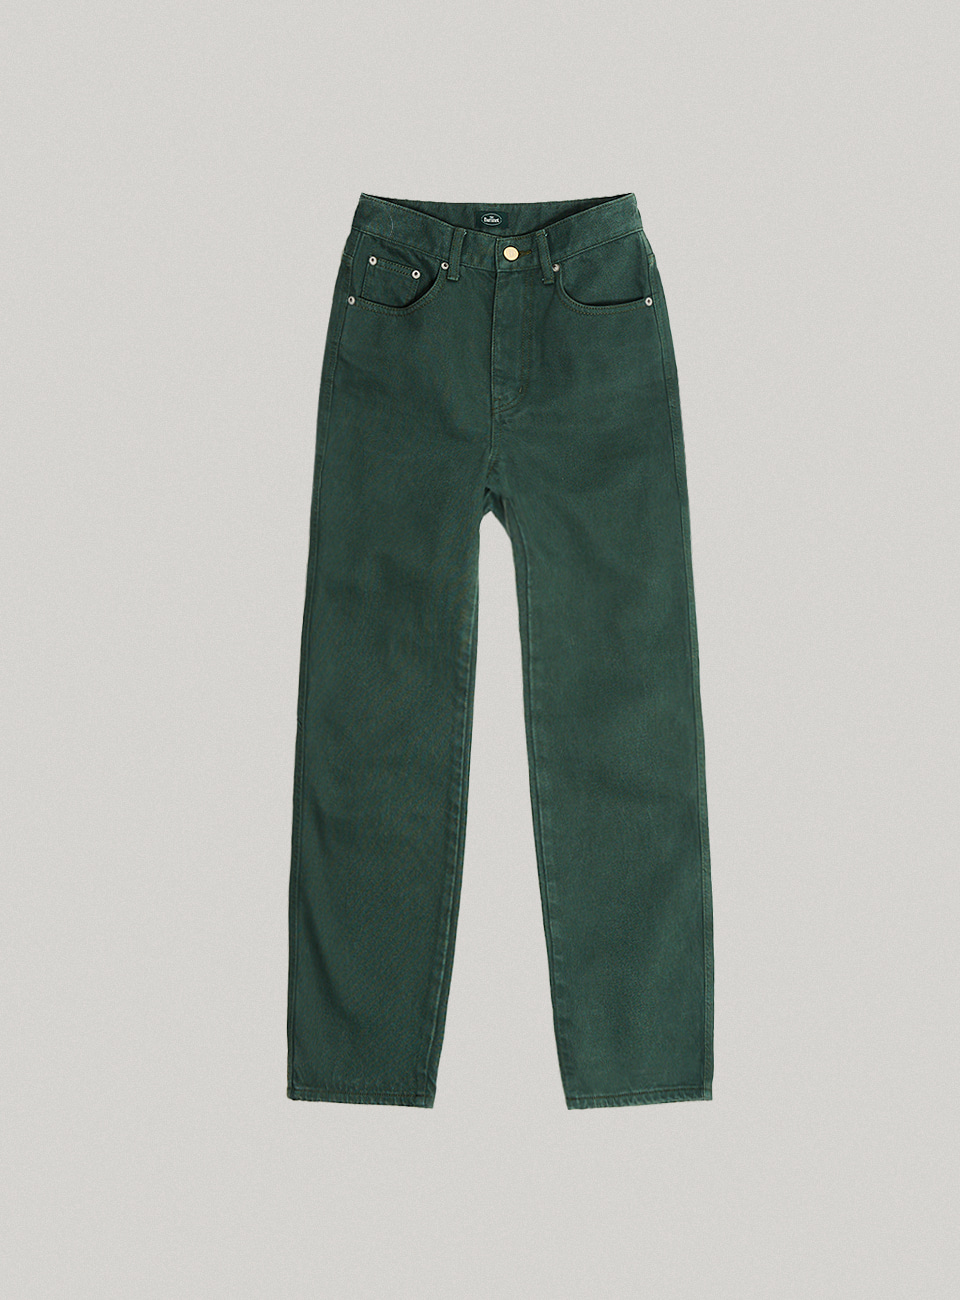 Green Bolide Denim Pants